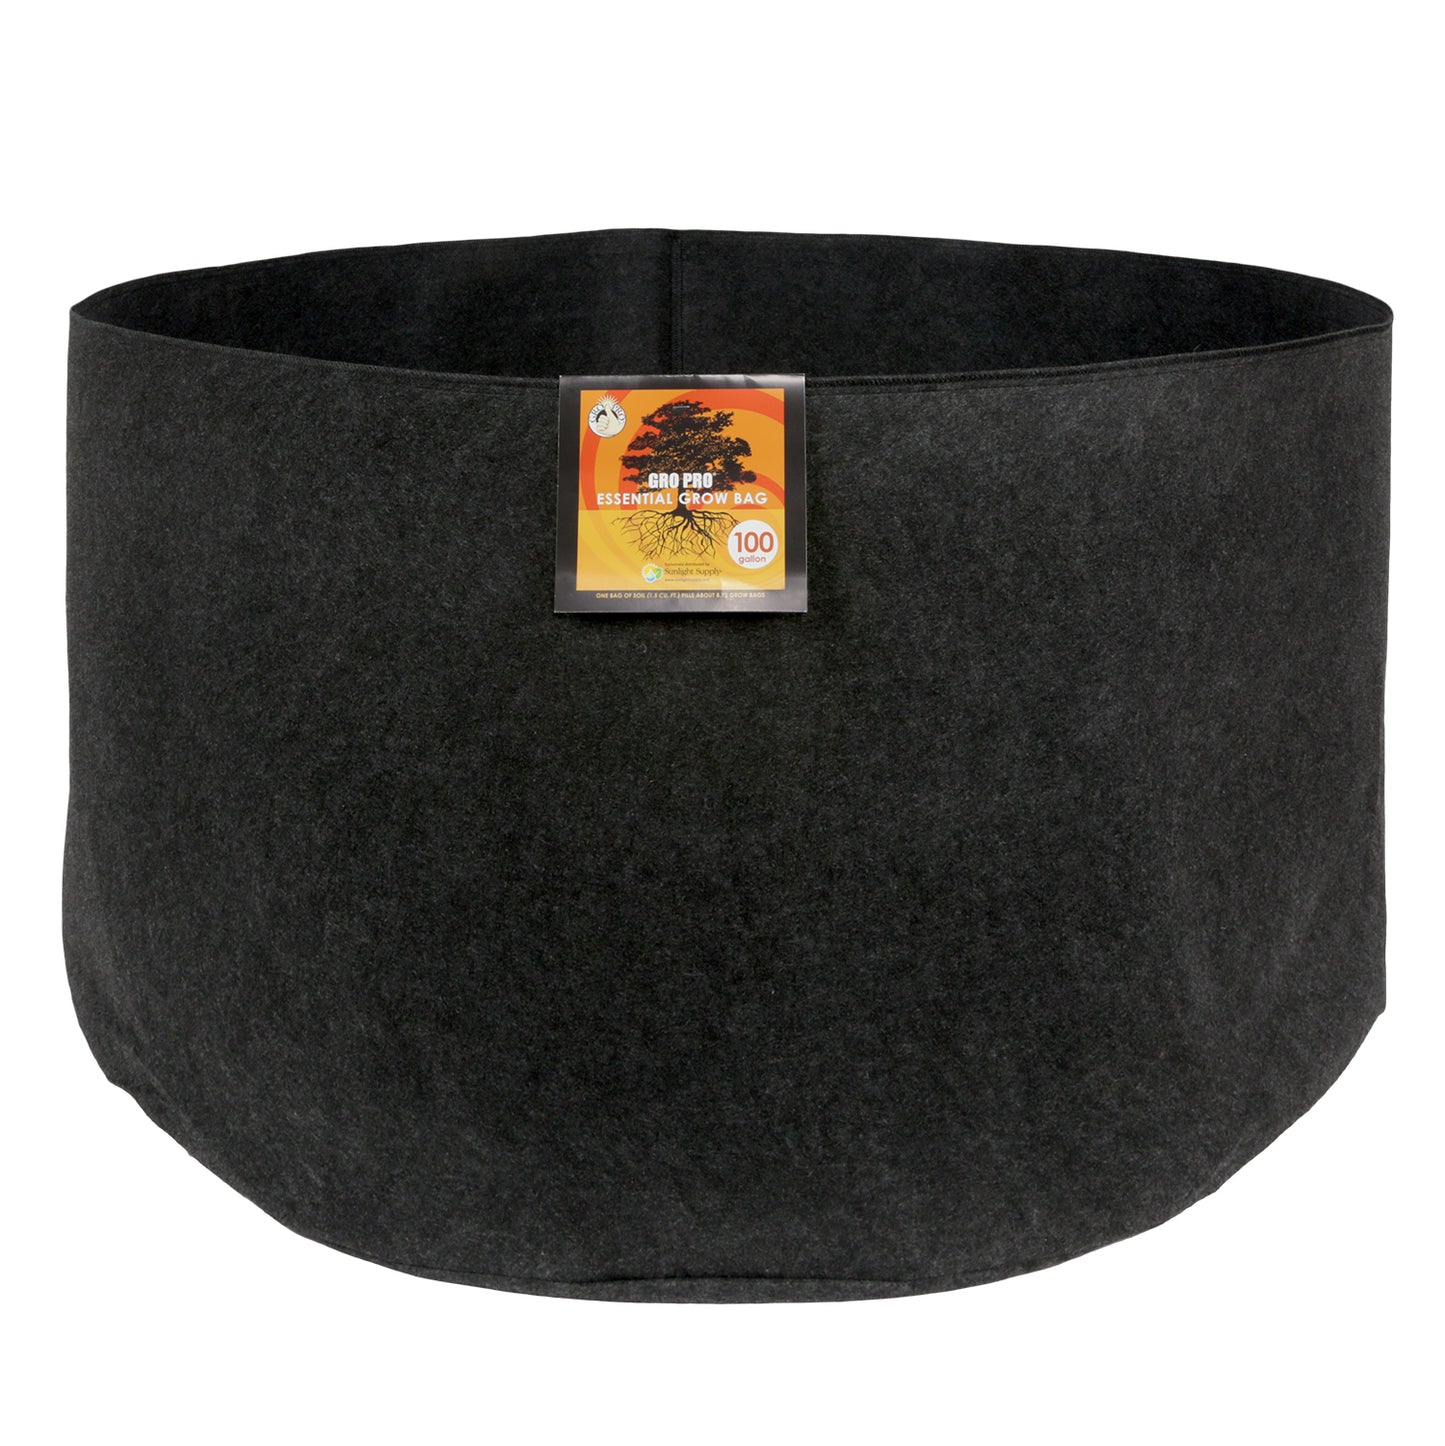 Gro Pro Essential Round Fabric Pot - Black 100 Gallon 